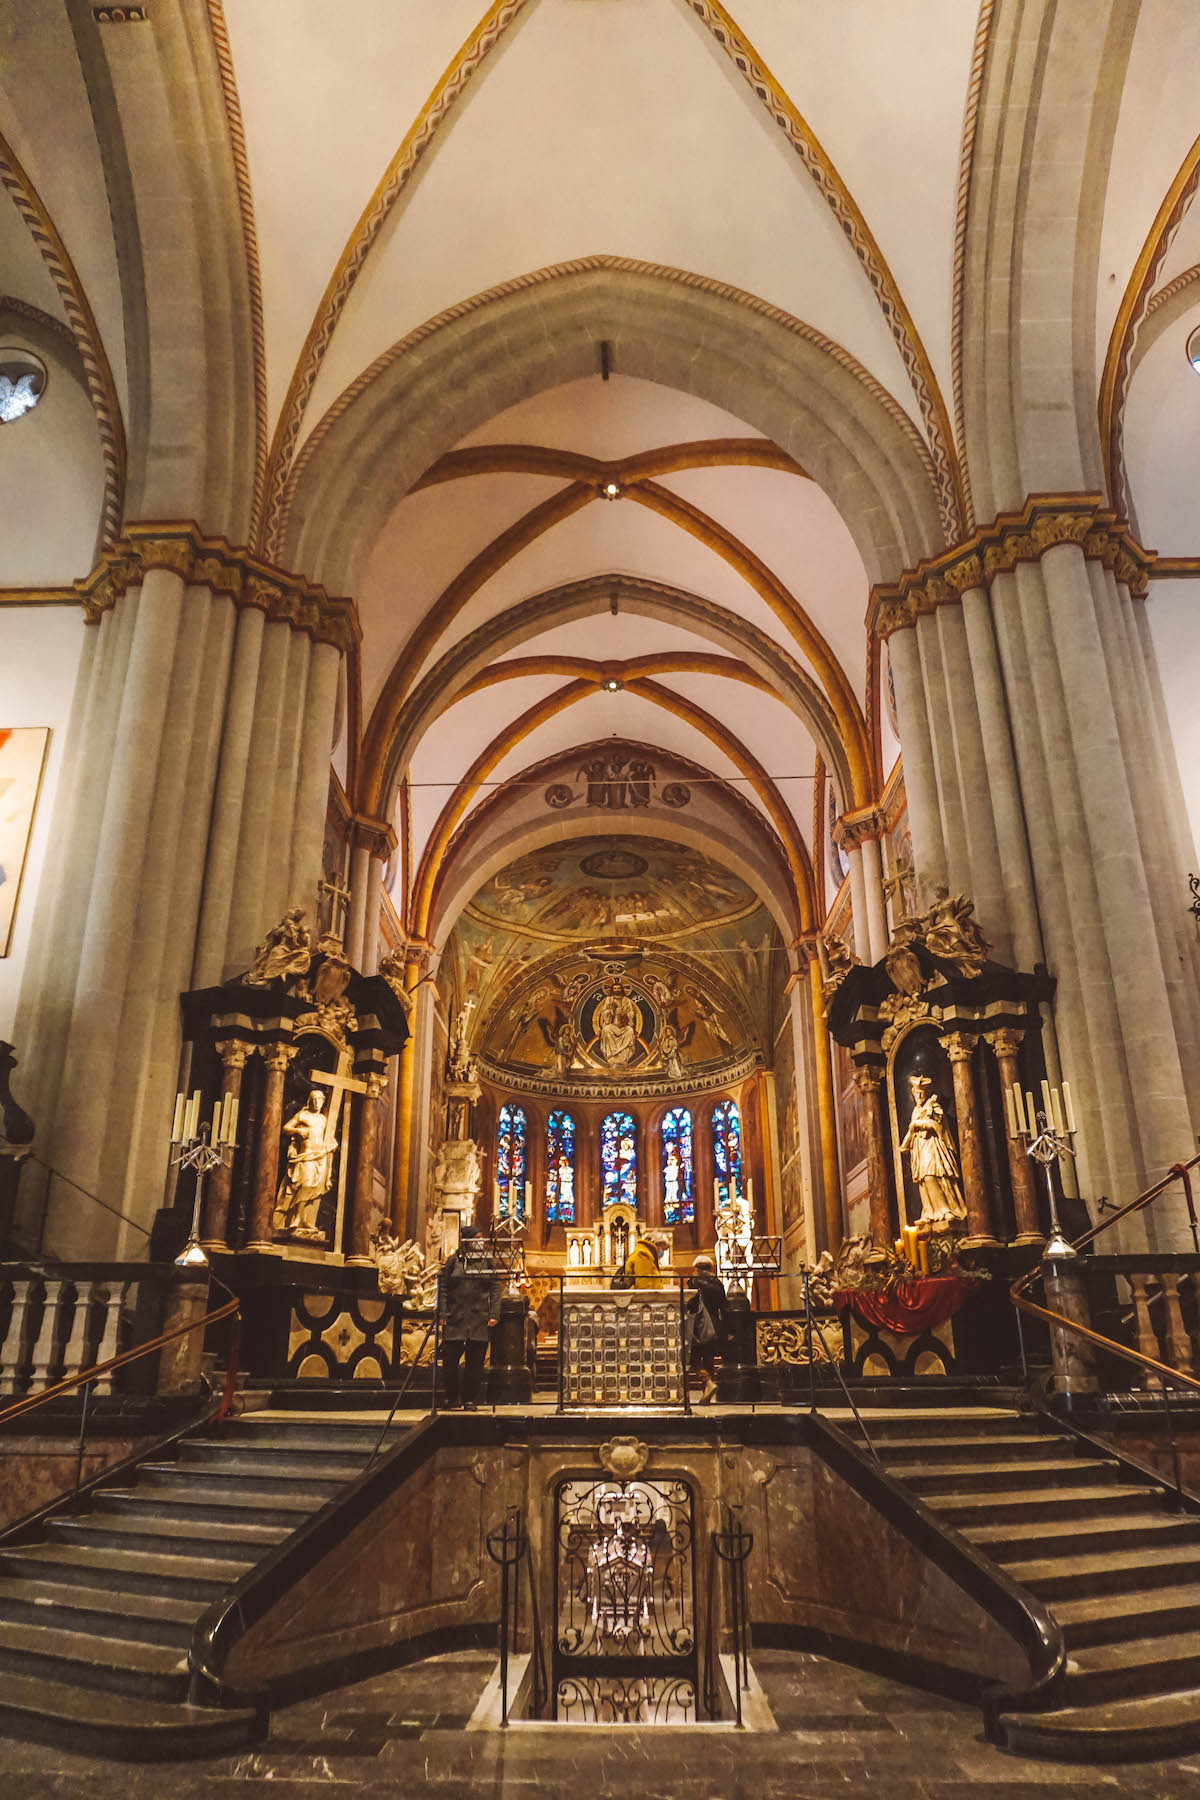 Interior of the Bonn Basilica